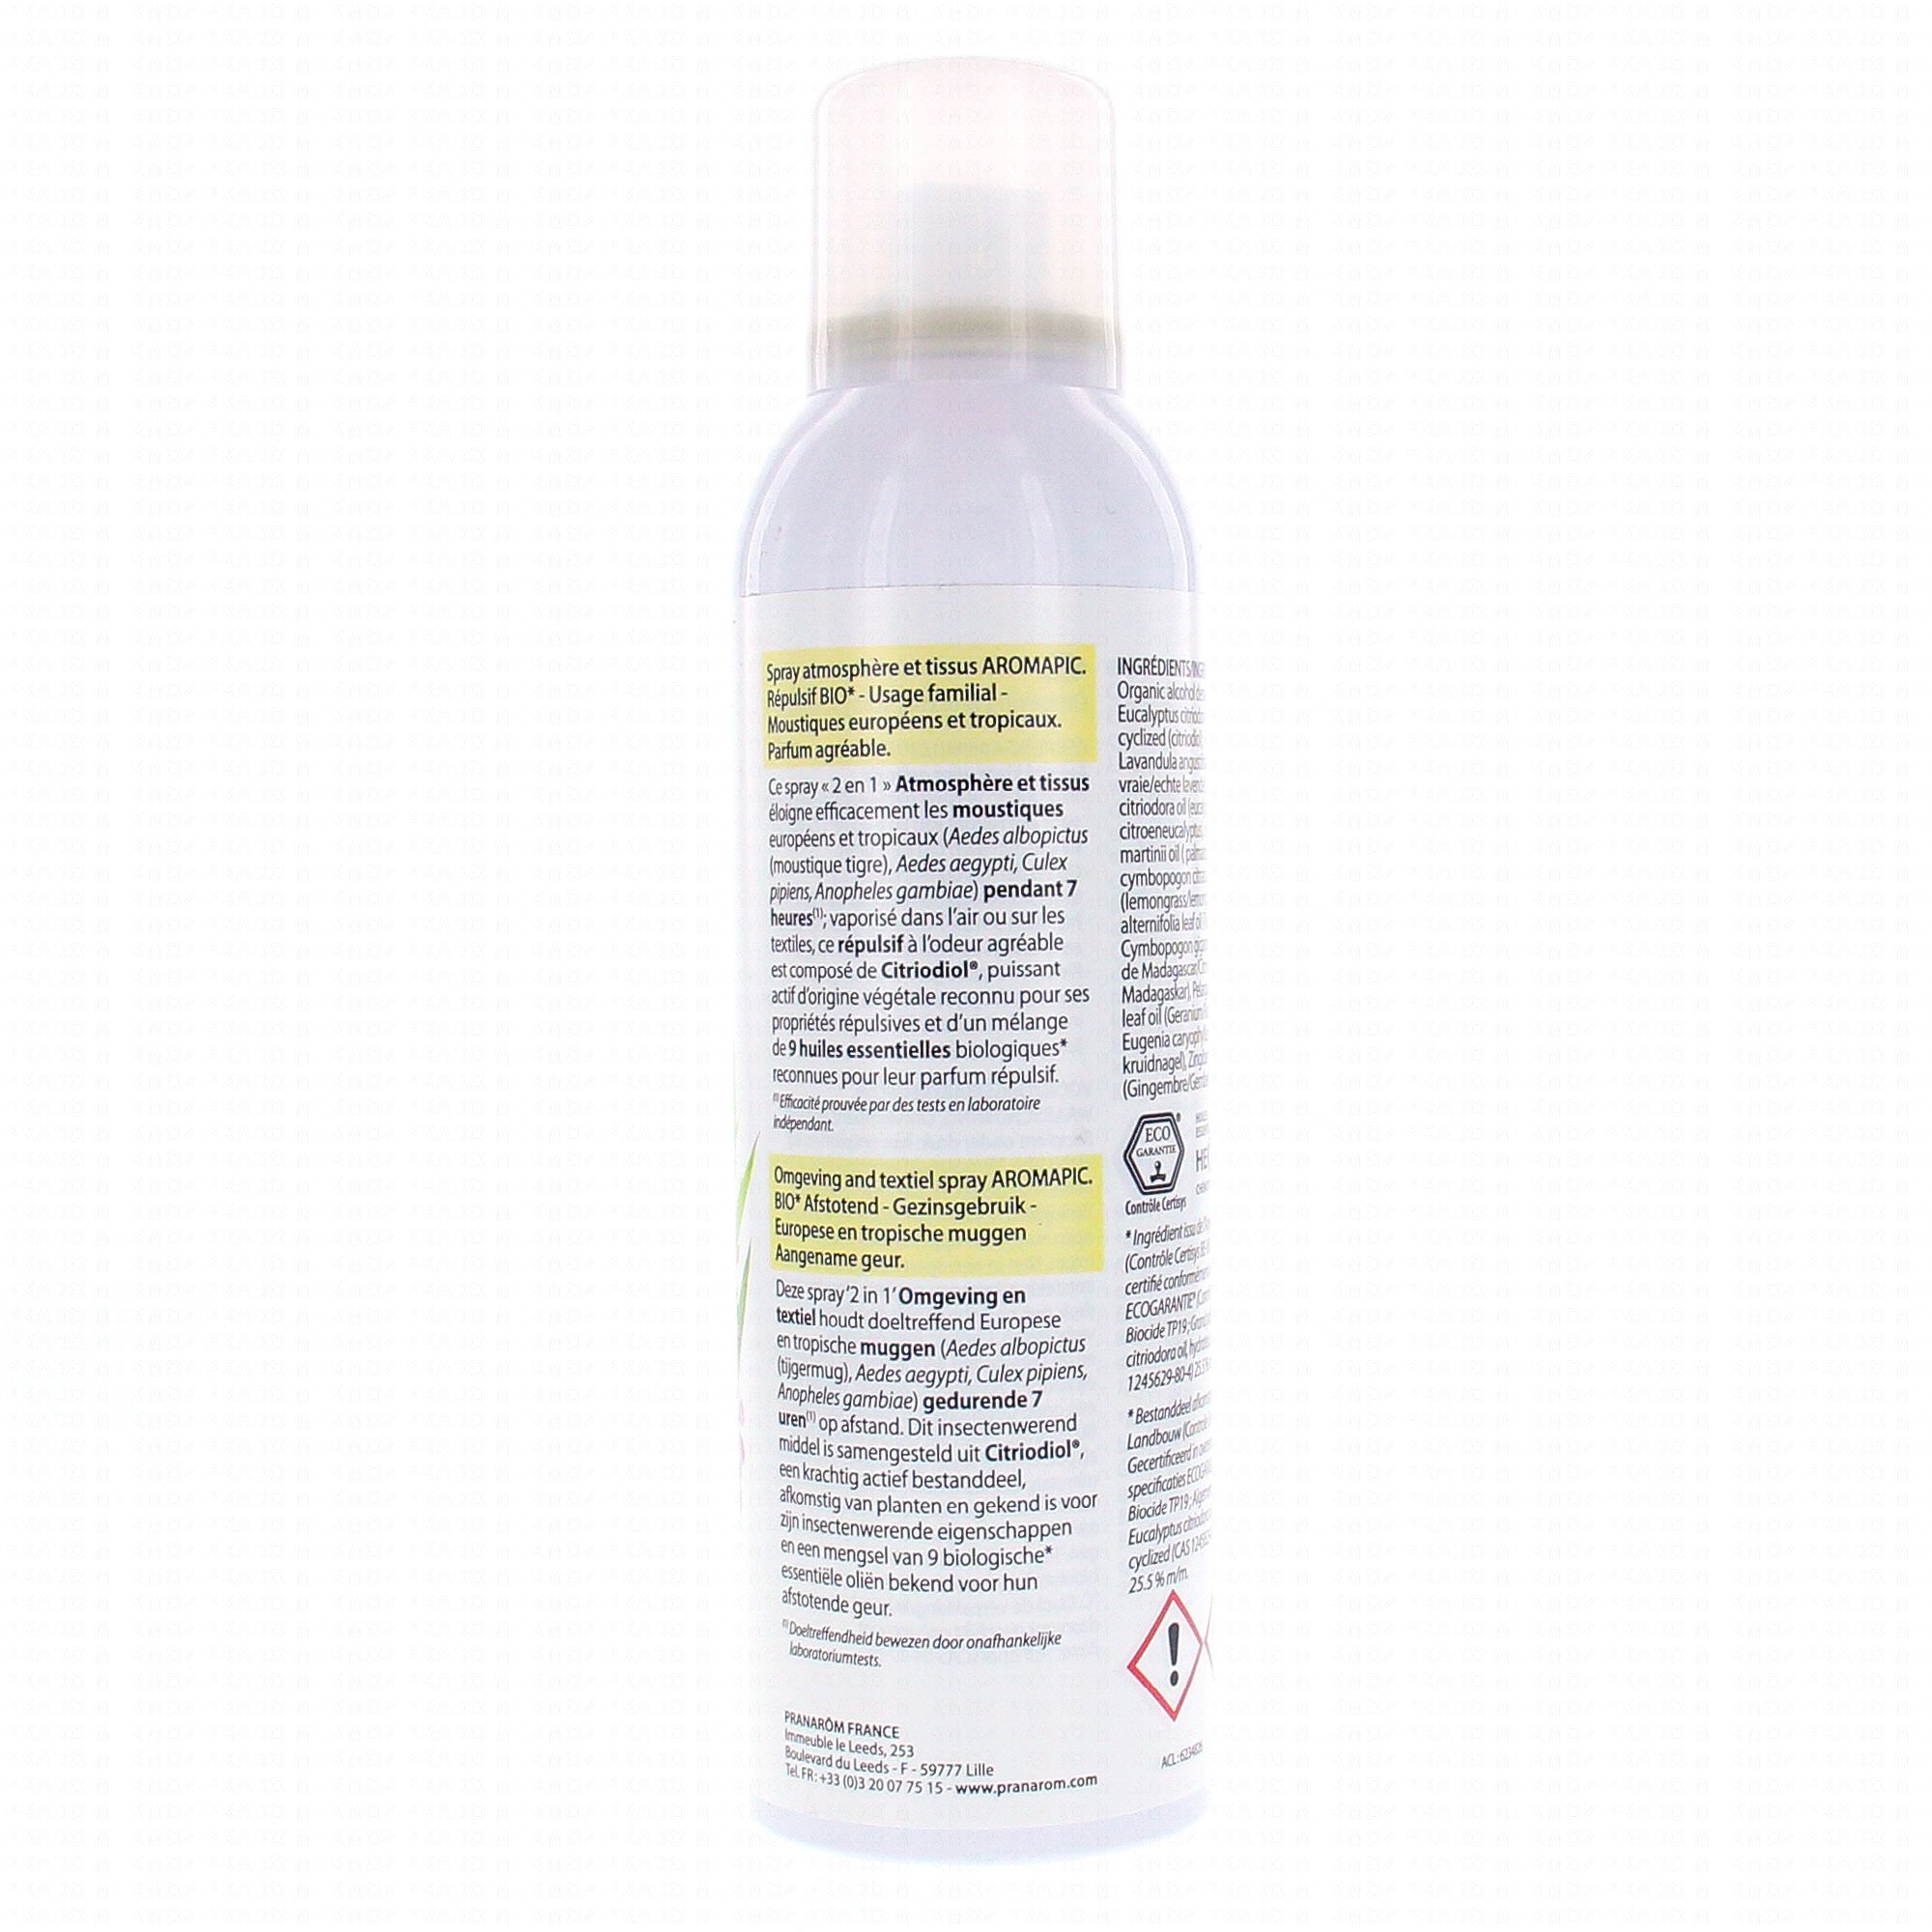 PRANAROM Aromapic - Spray anti-moustique atmosphère et tissus flacon 150 ml  - Pharmacie Prado Mermoz